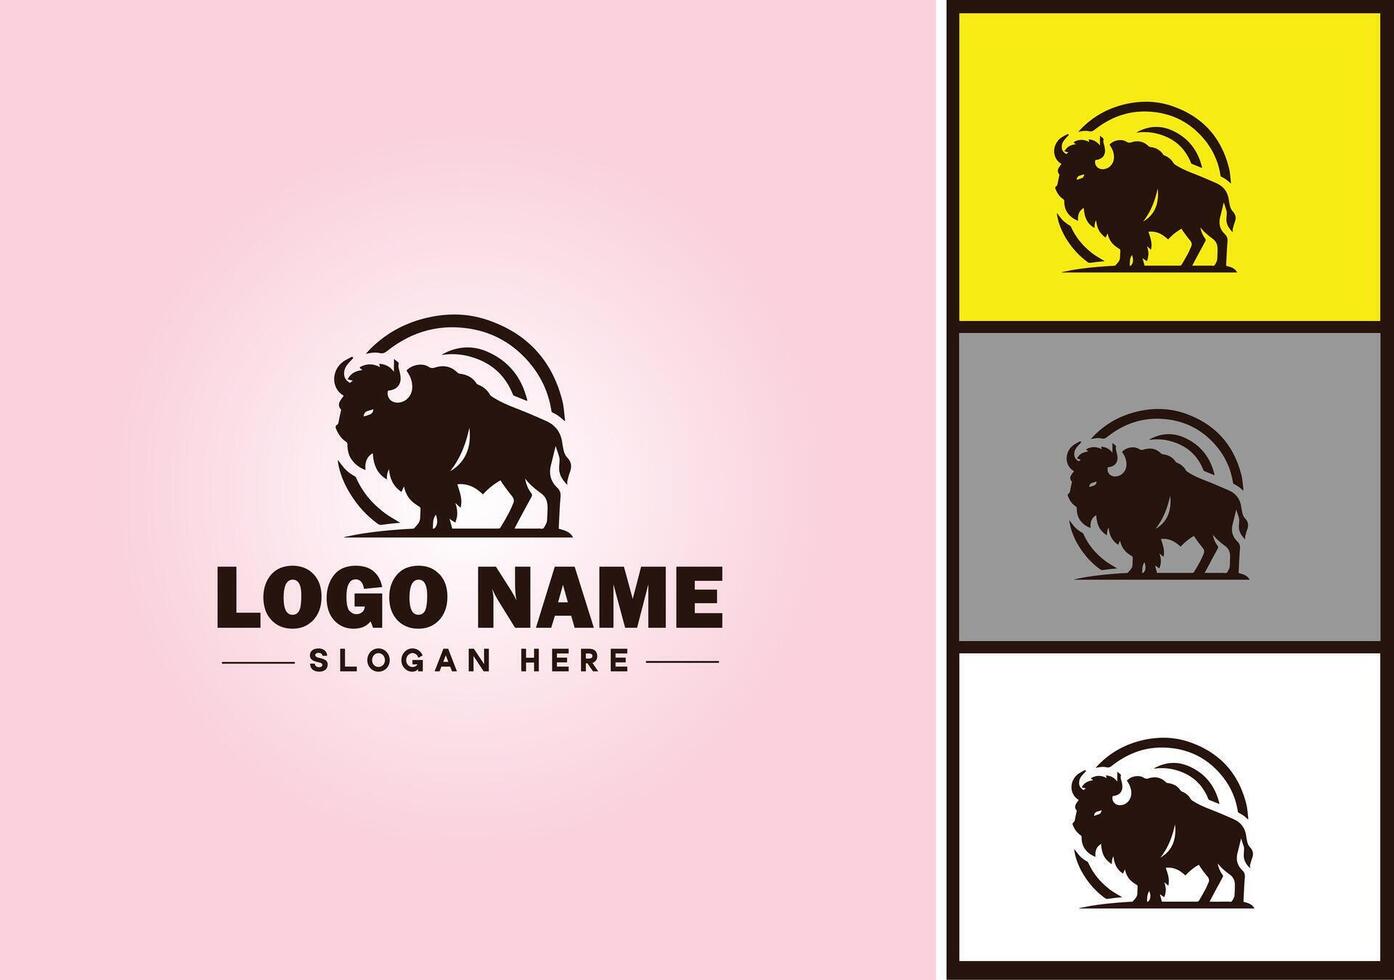 Bison Logo Vektor Kunst Symbol Grafik zum Geschäft Marke Symbol Bison Logo Vorlage